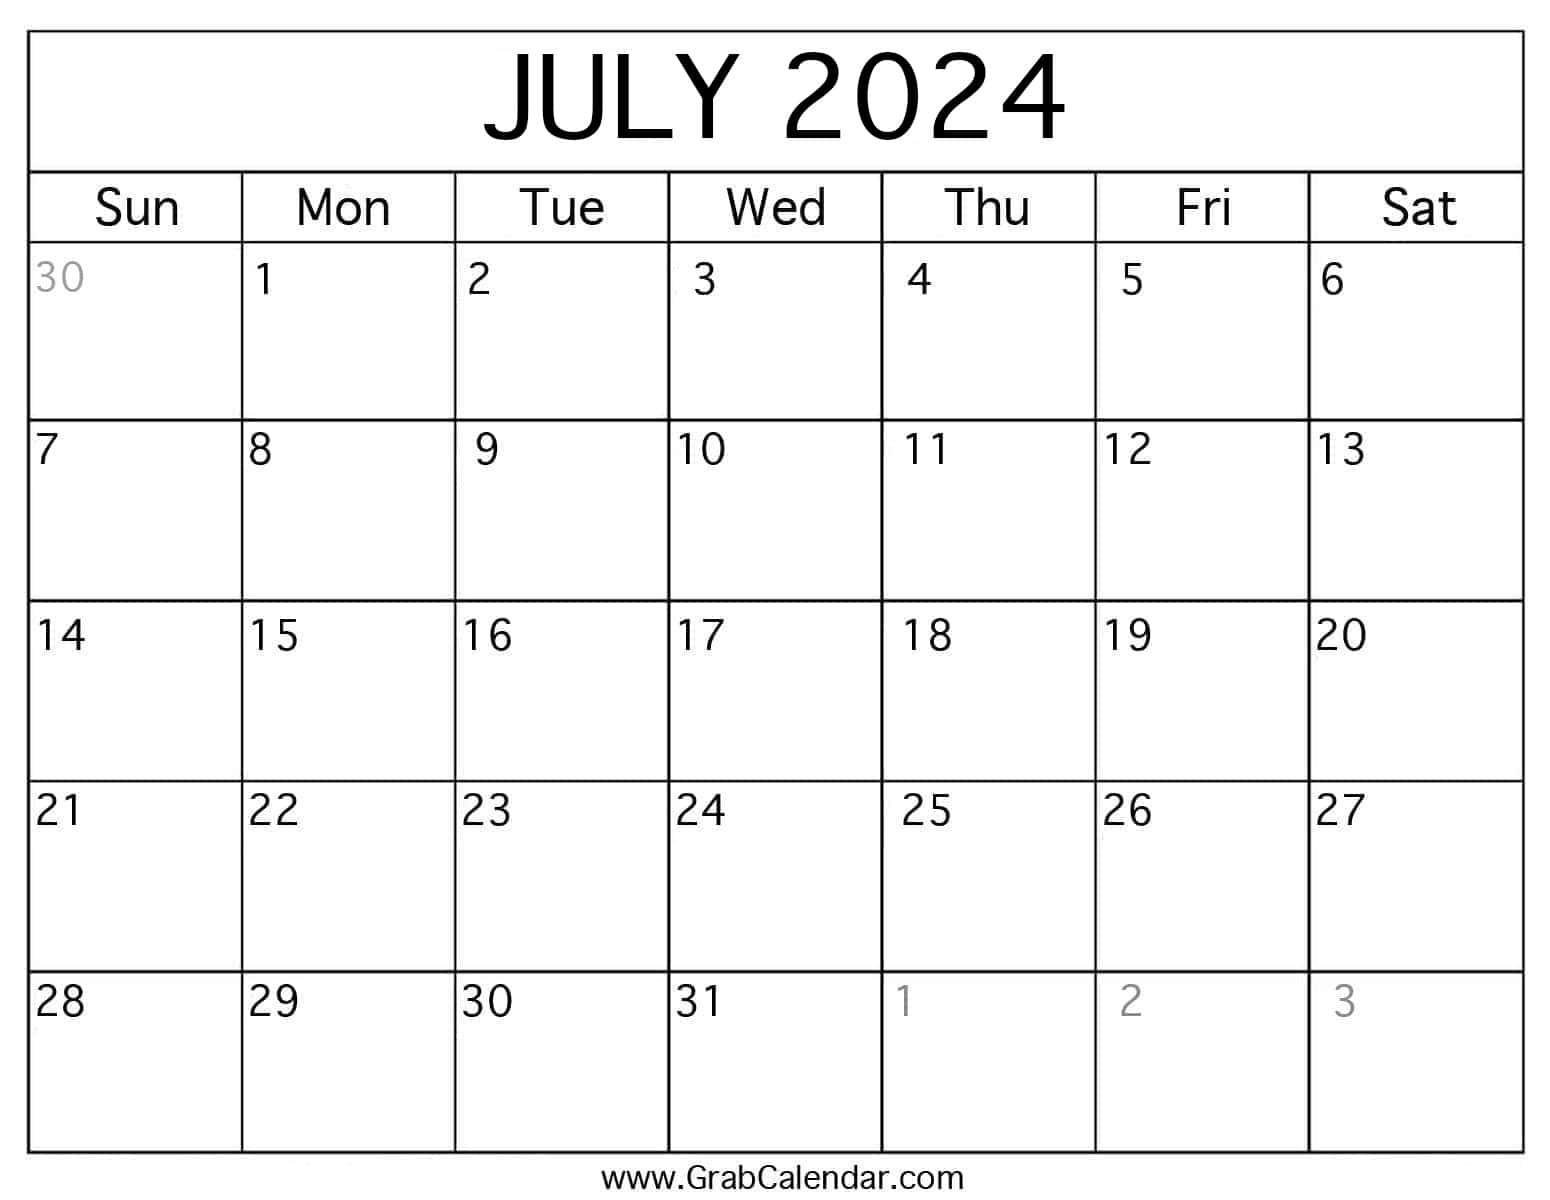 Printable July 2024 Calendar for July Fun Facts Calendar 2024